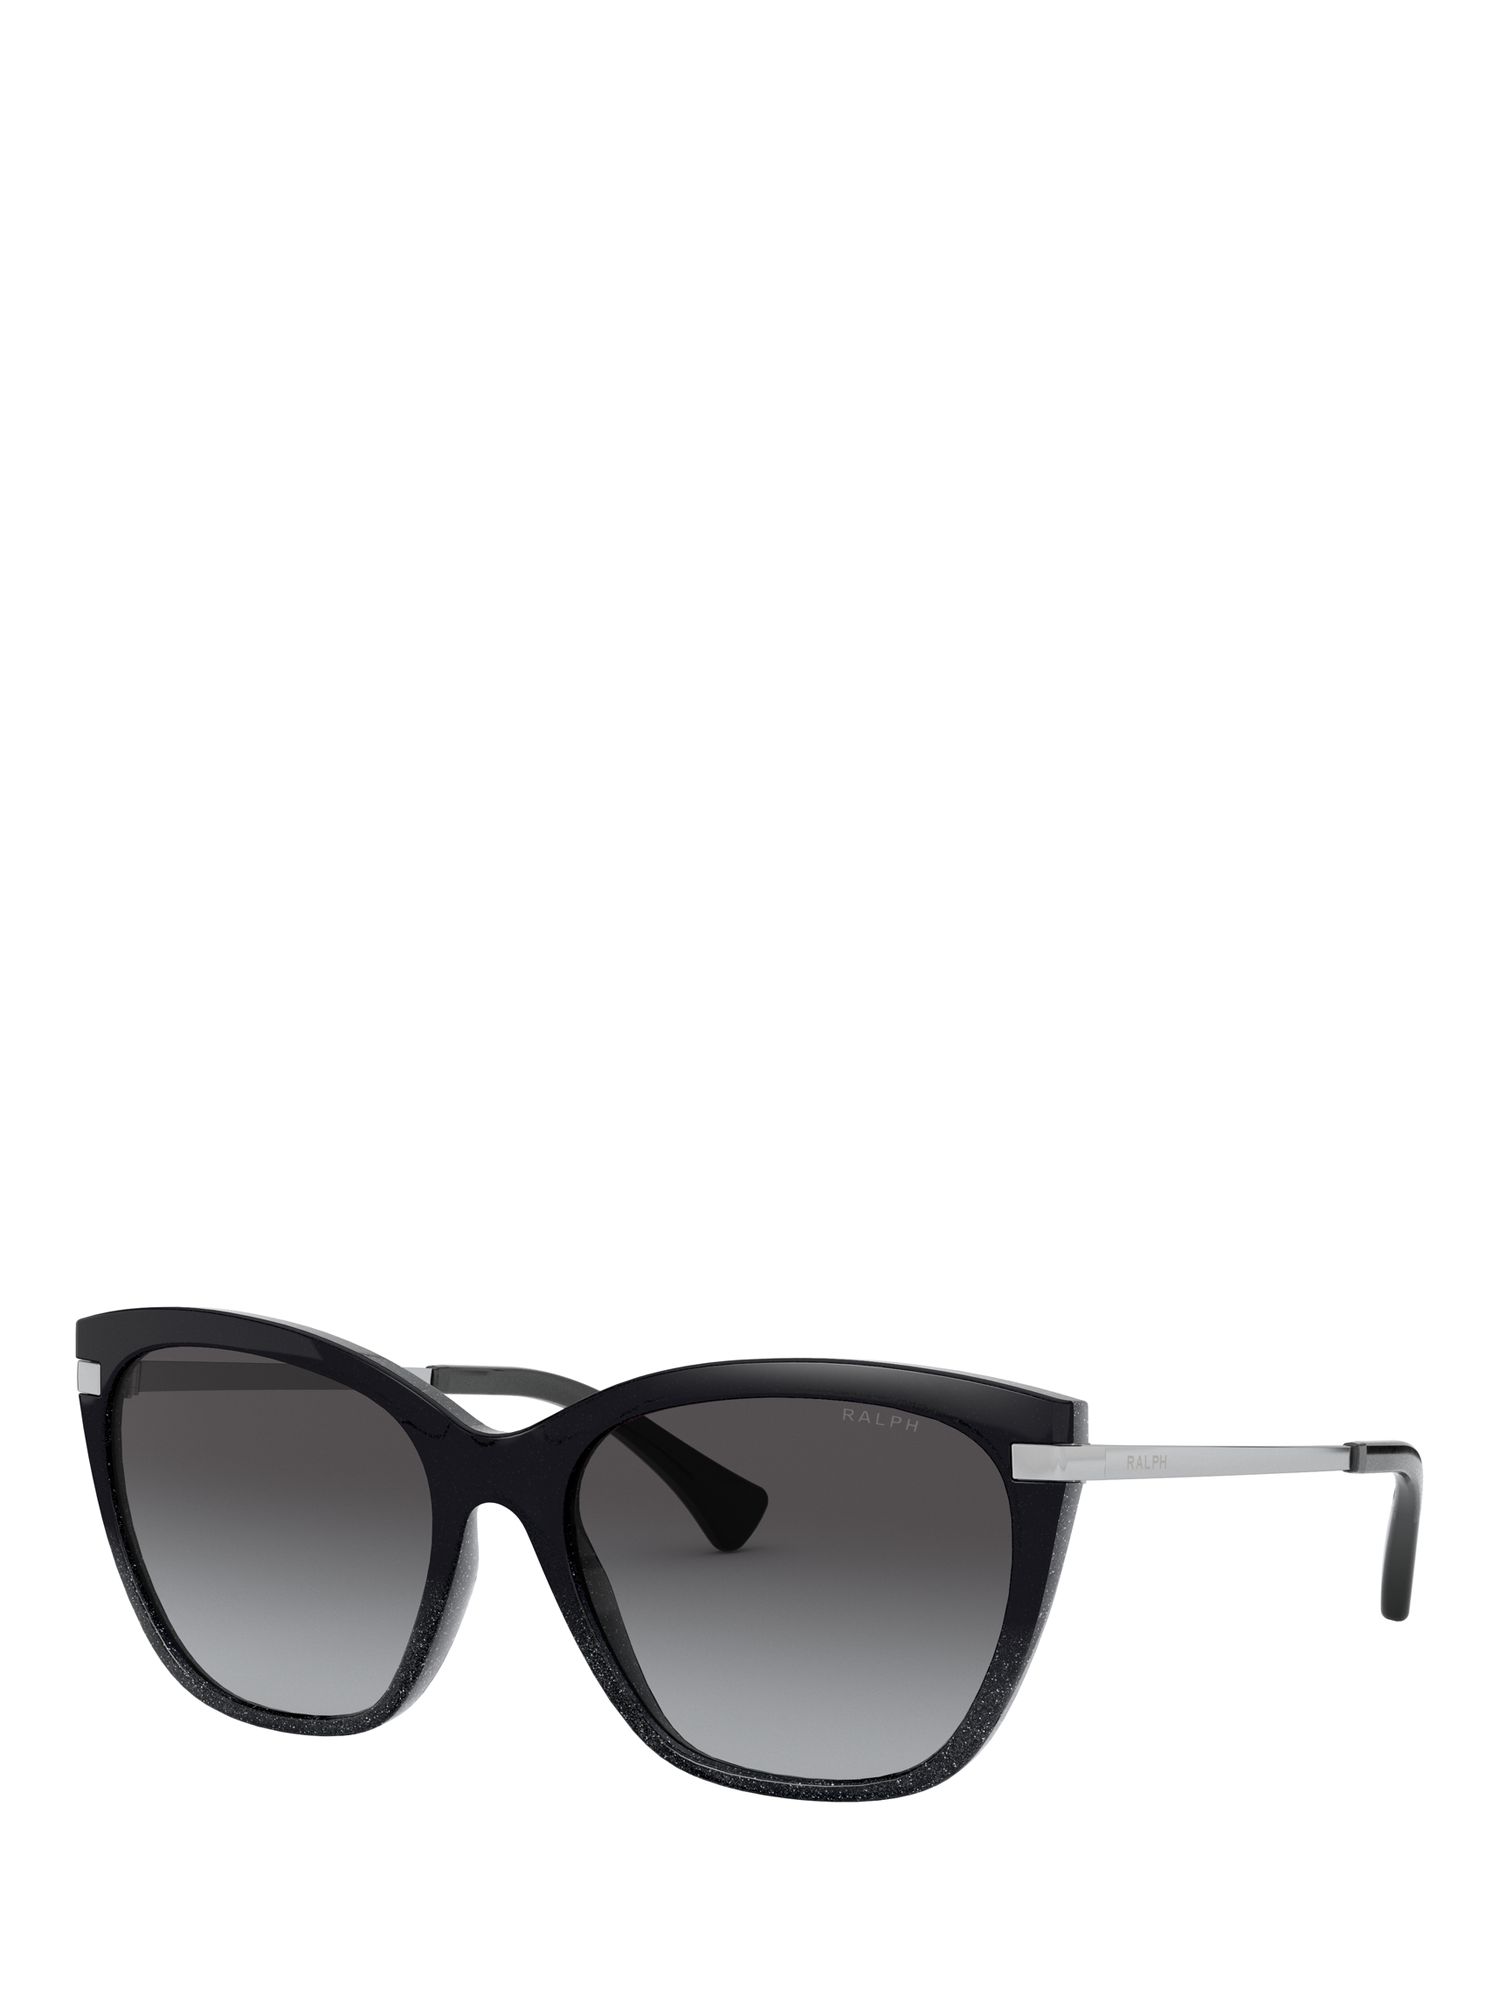 Ralph Lauren RA5267 Women\'s Butterfly Sunglasses, Black/Grey Gradient at  John Lewis & Partners